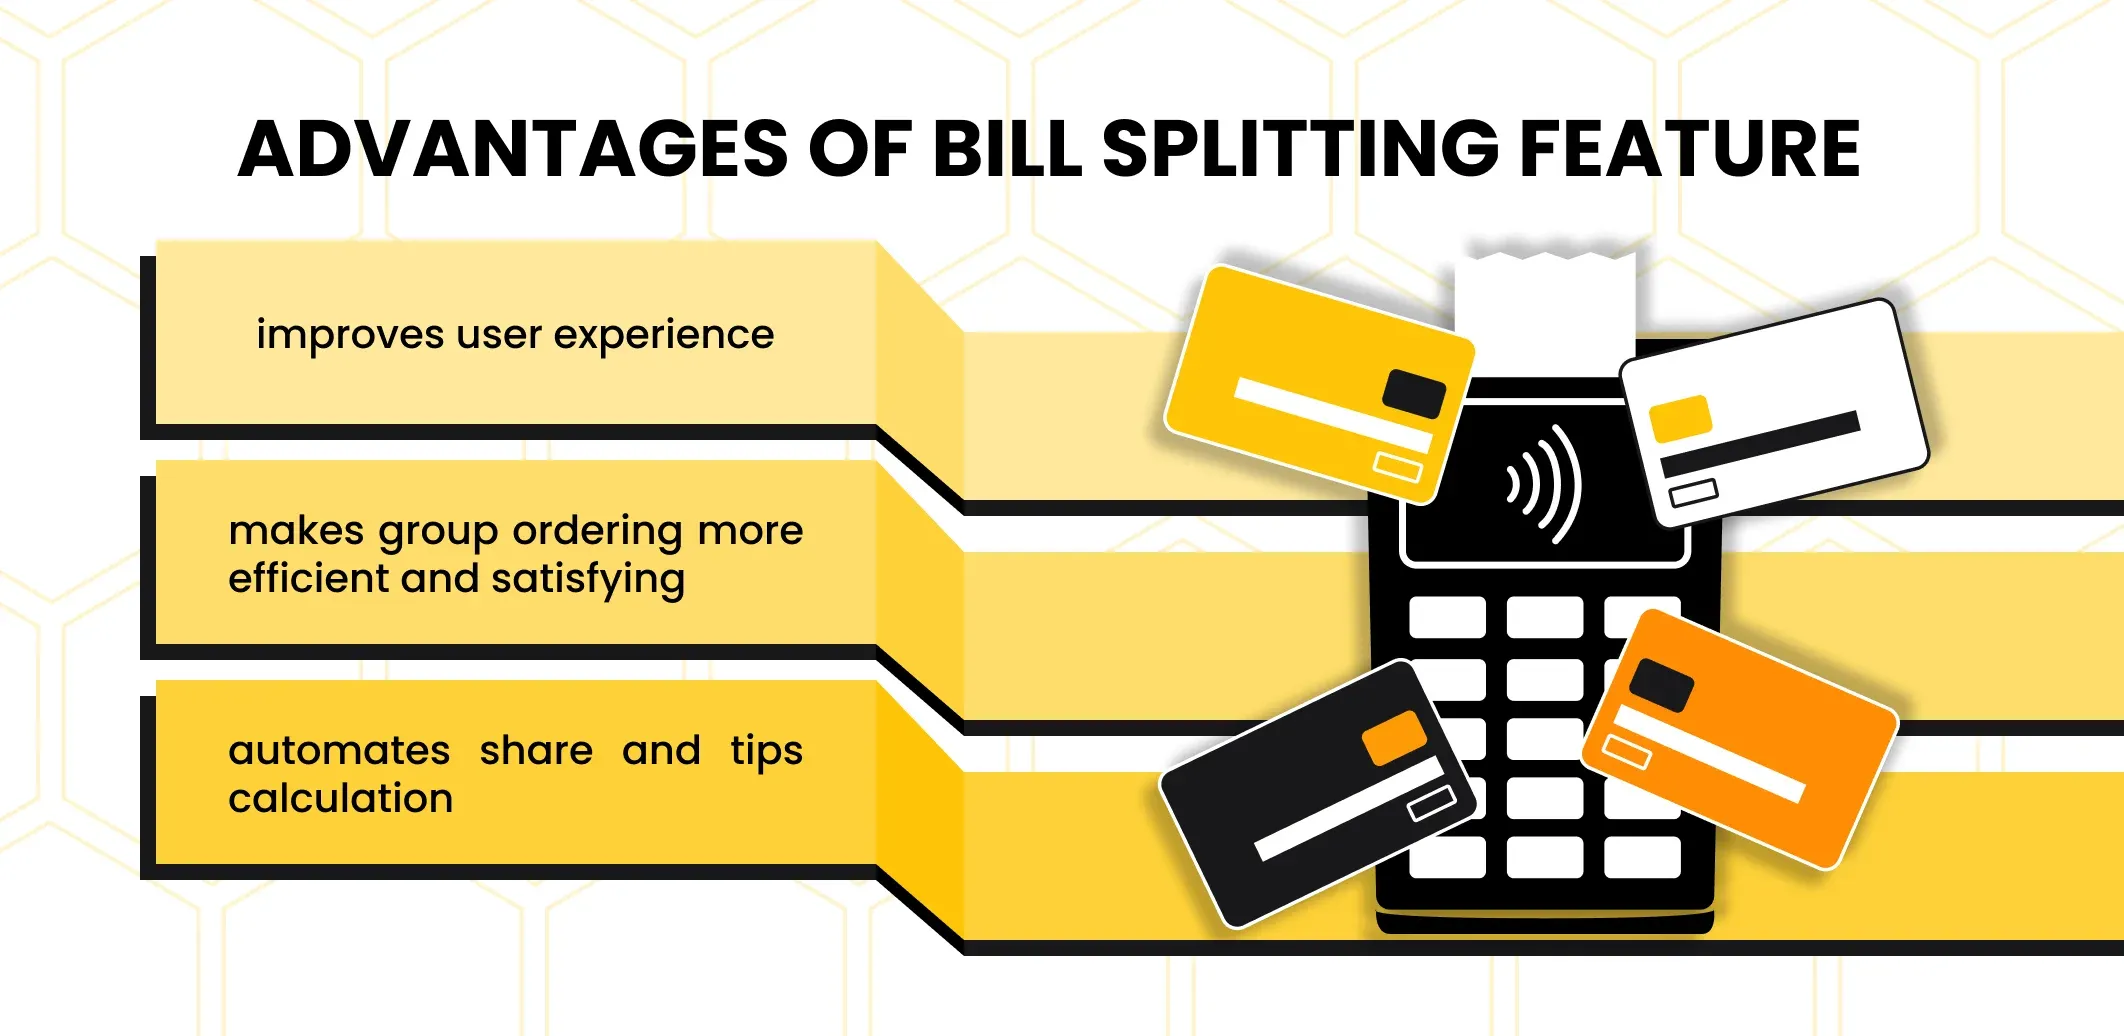 bill splitting feature advantages